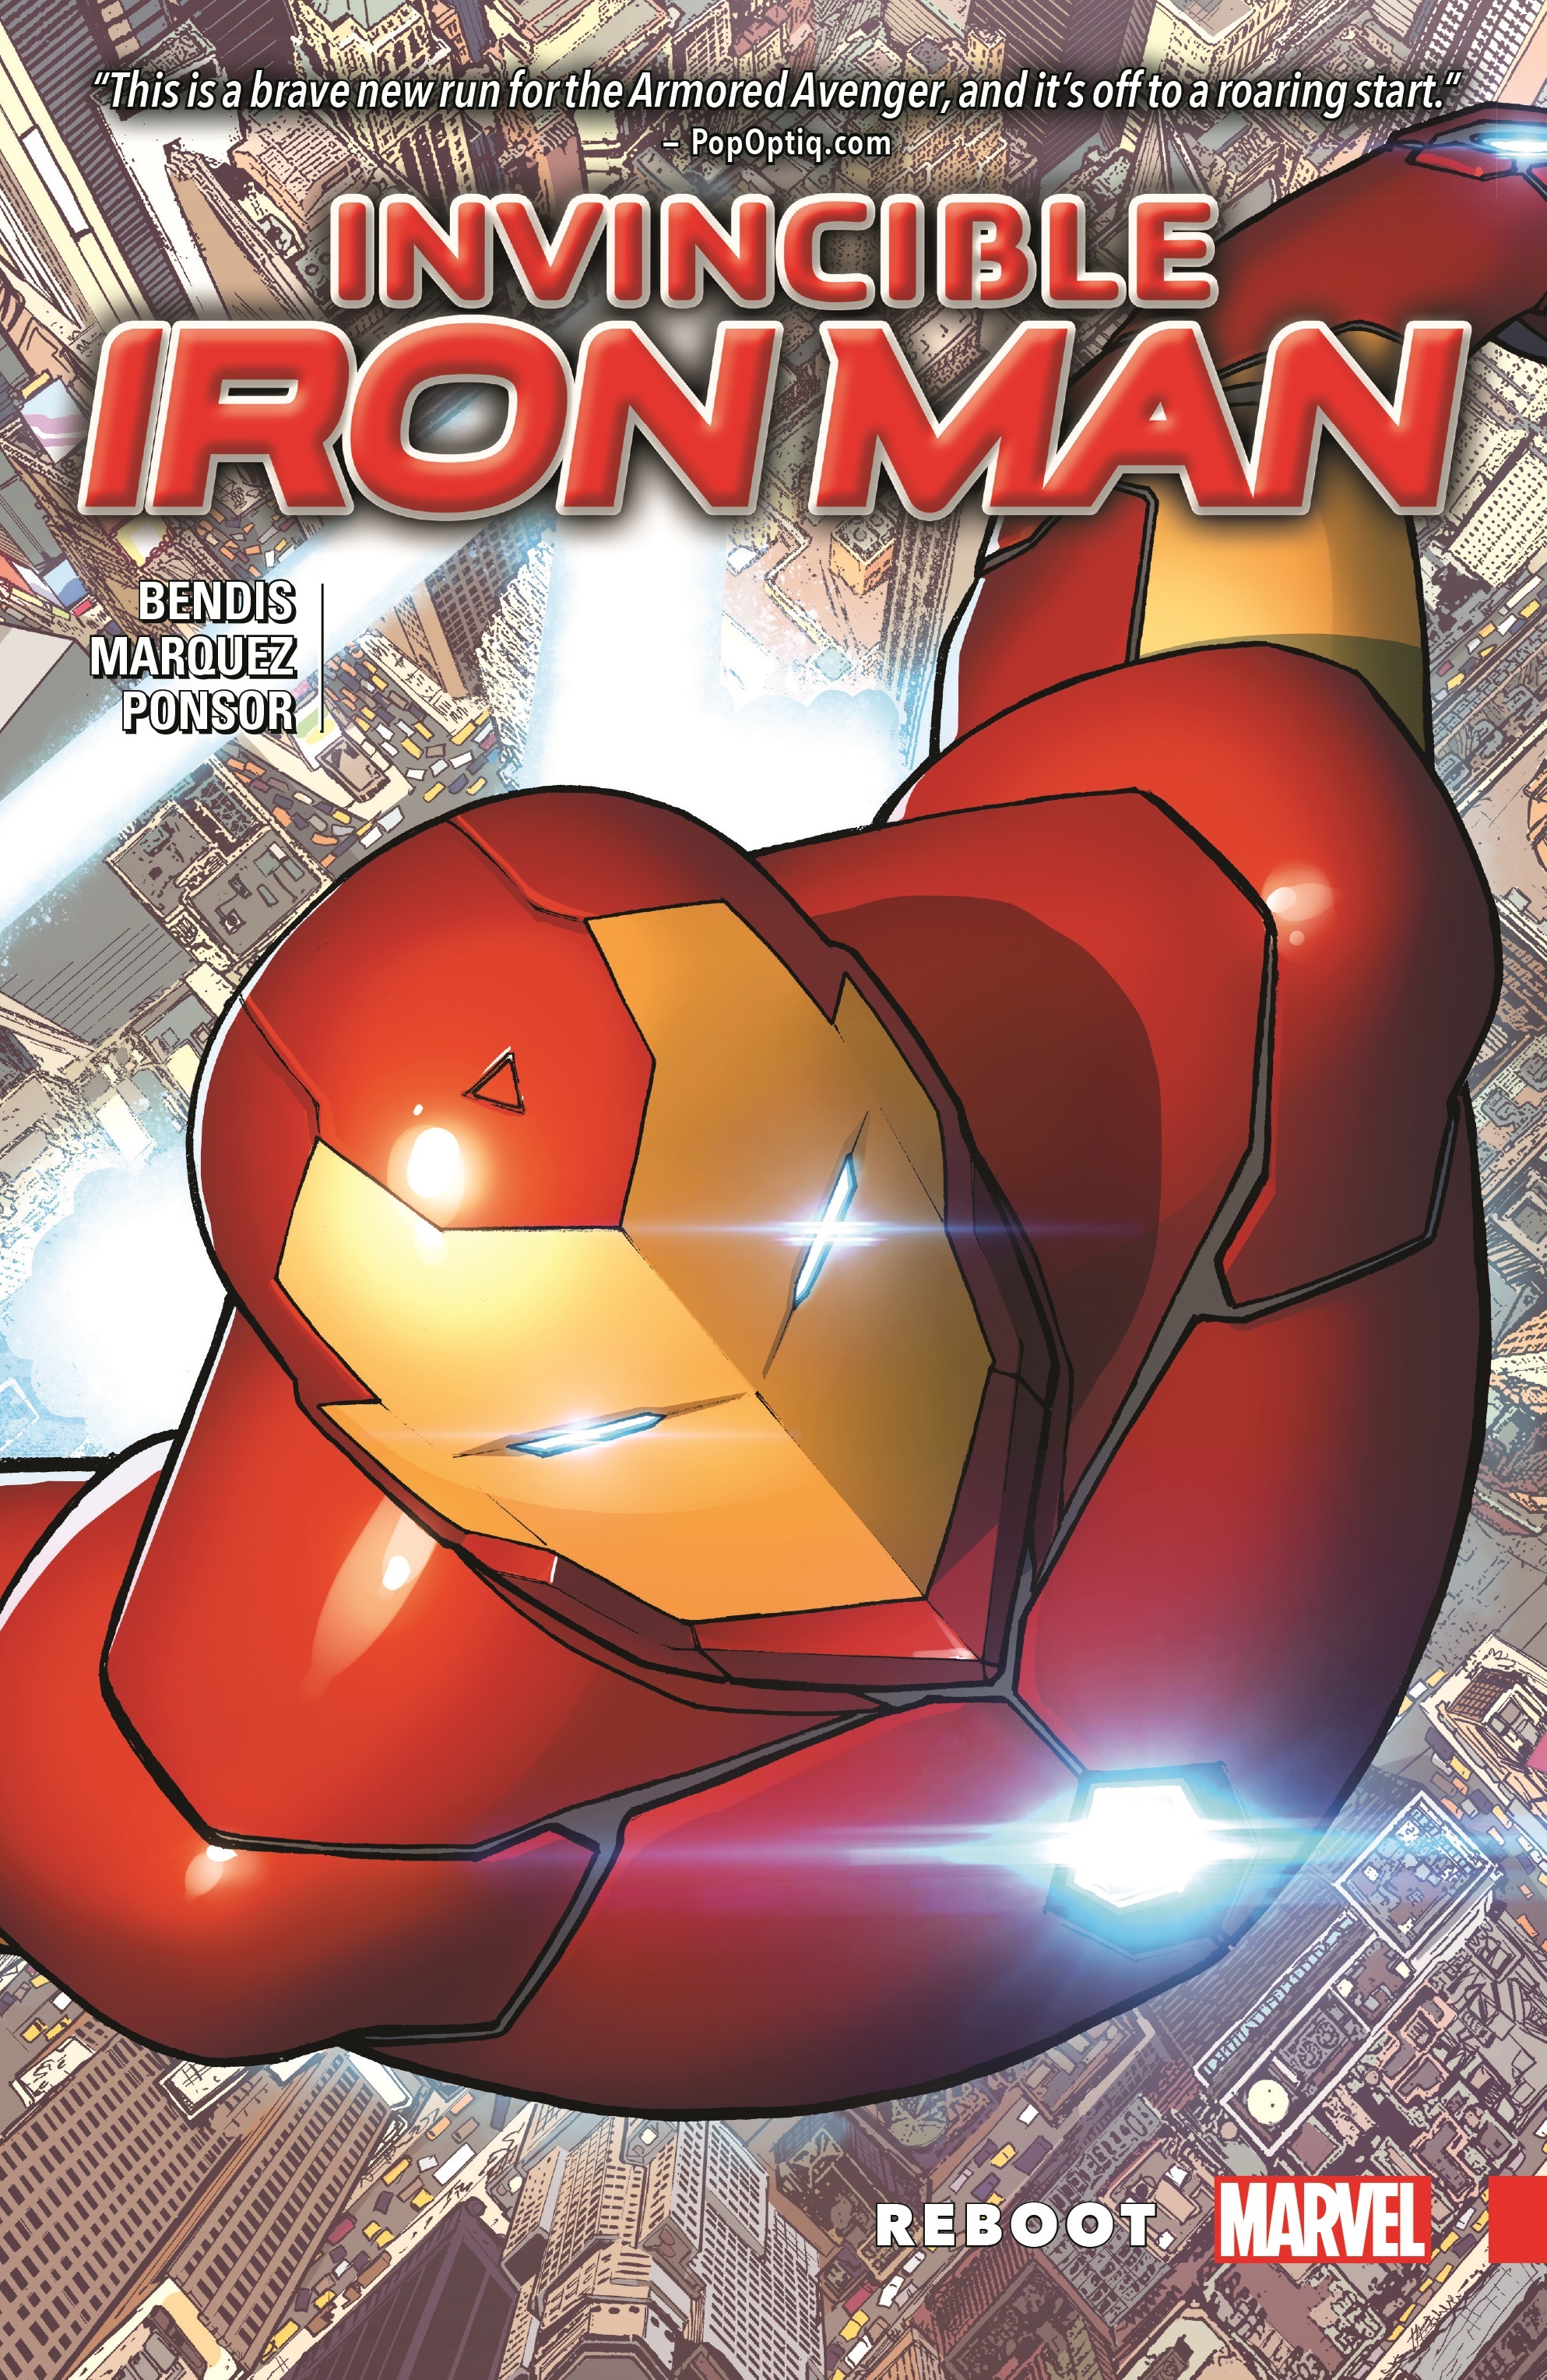 Invincible Iron Man Vol. 1: Reboot (Trade Paperback)